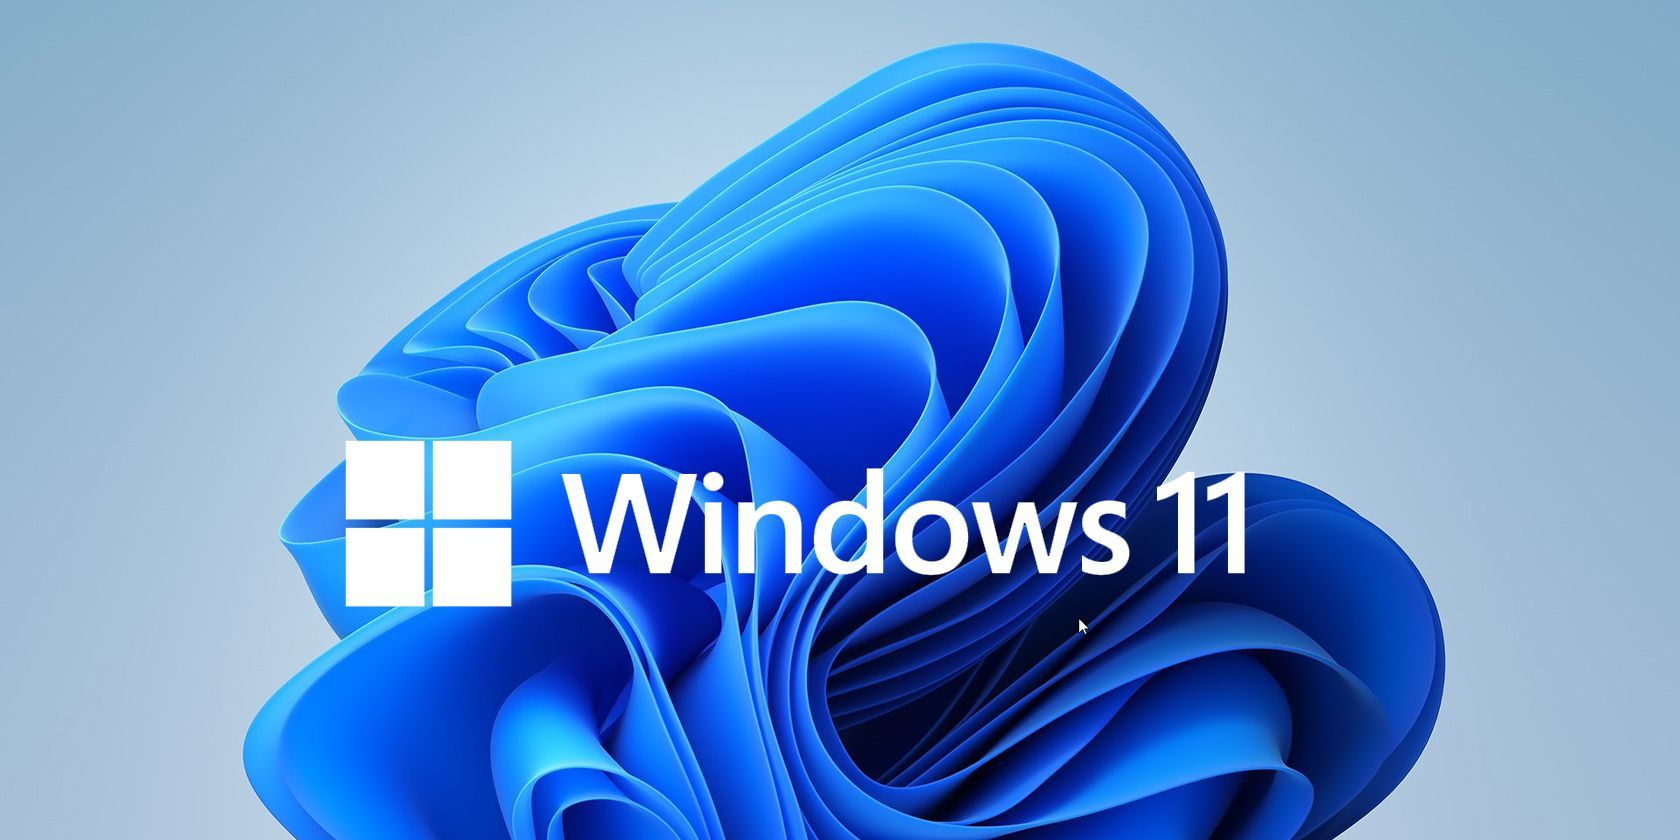  Windows 11 Hintergrundbild 1680x840. The 6 Best Apps for Customizing Windows 11